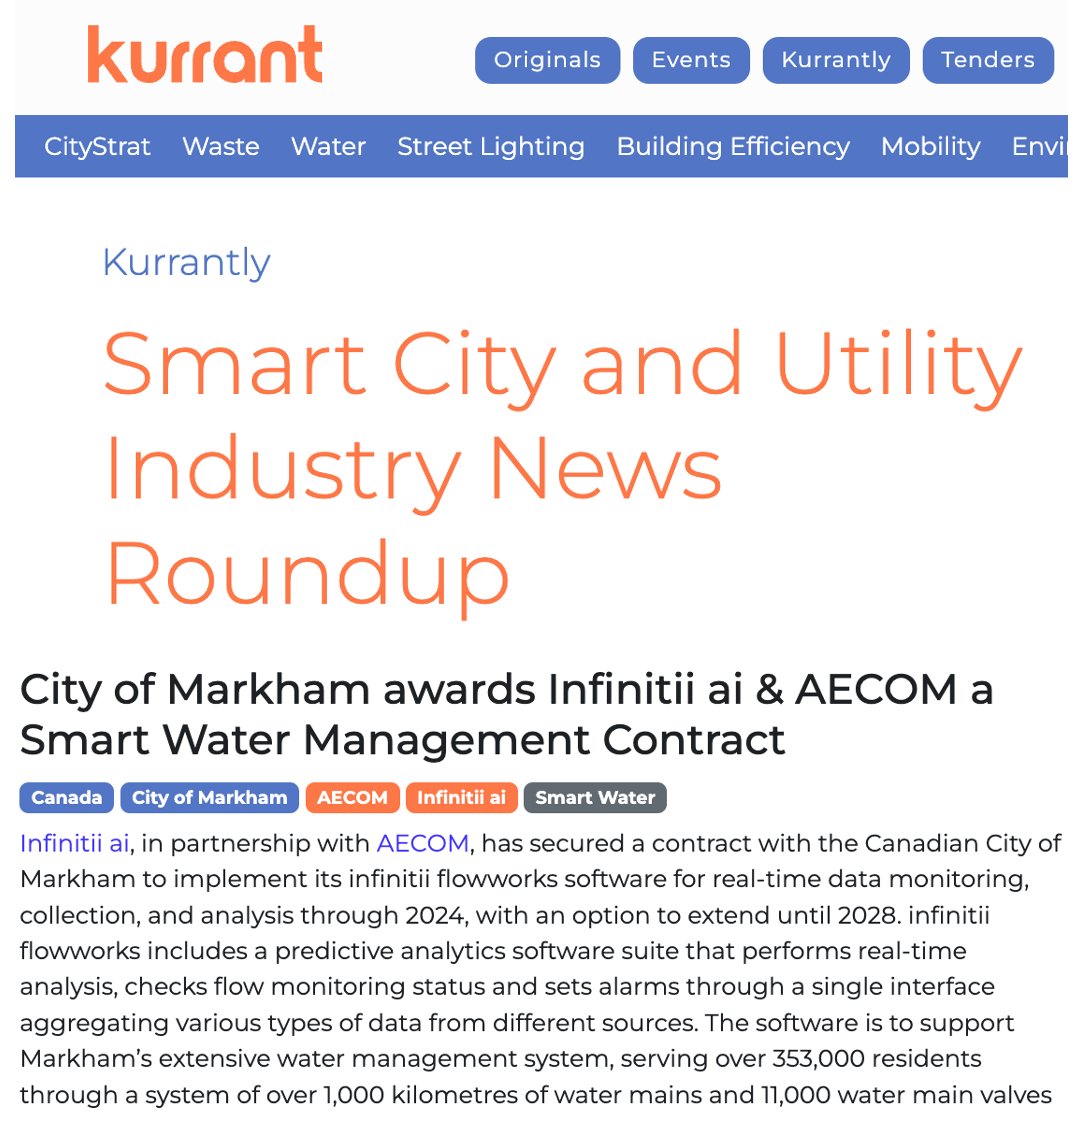 @KurrantI profiles @infinitiiai's win @cityofmarkham with @AECOM in today's #SmartCity and #Utility Industry #News Roundup. kurrant.com/kurrantly/smar…

$IAI.cn $CDTAF $7C5 #CSE #OTC #FSE #AI #ML #Water #Infrastructure #artificialintelligence #machinelearning